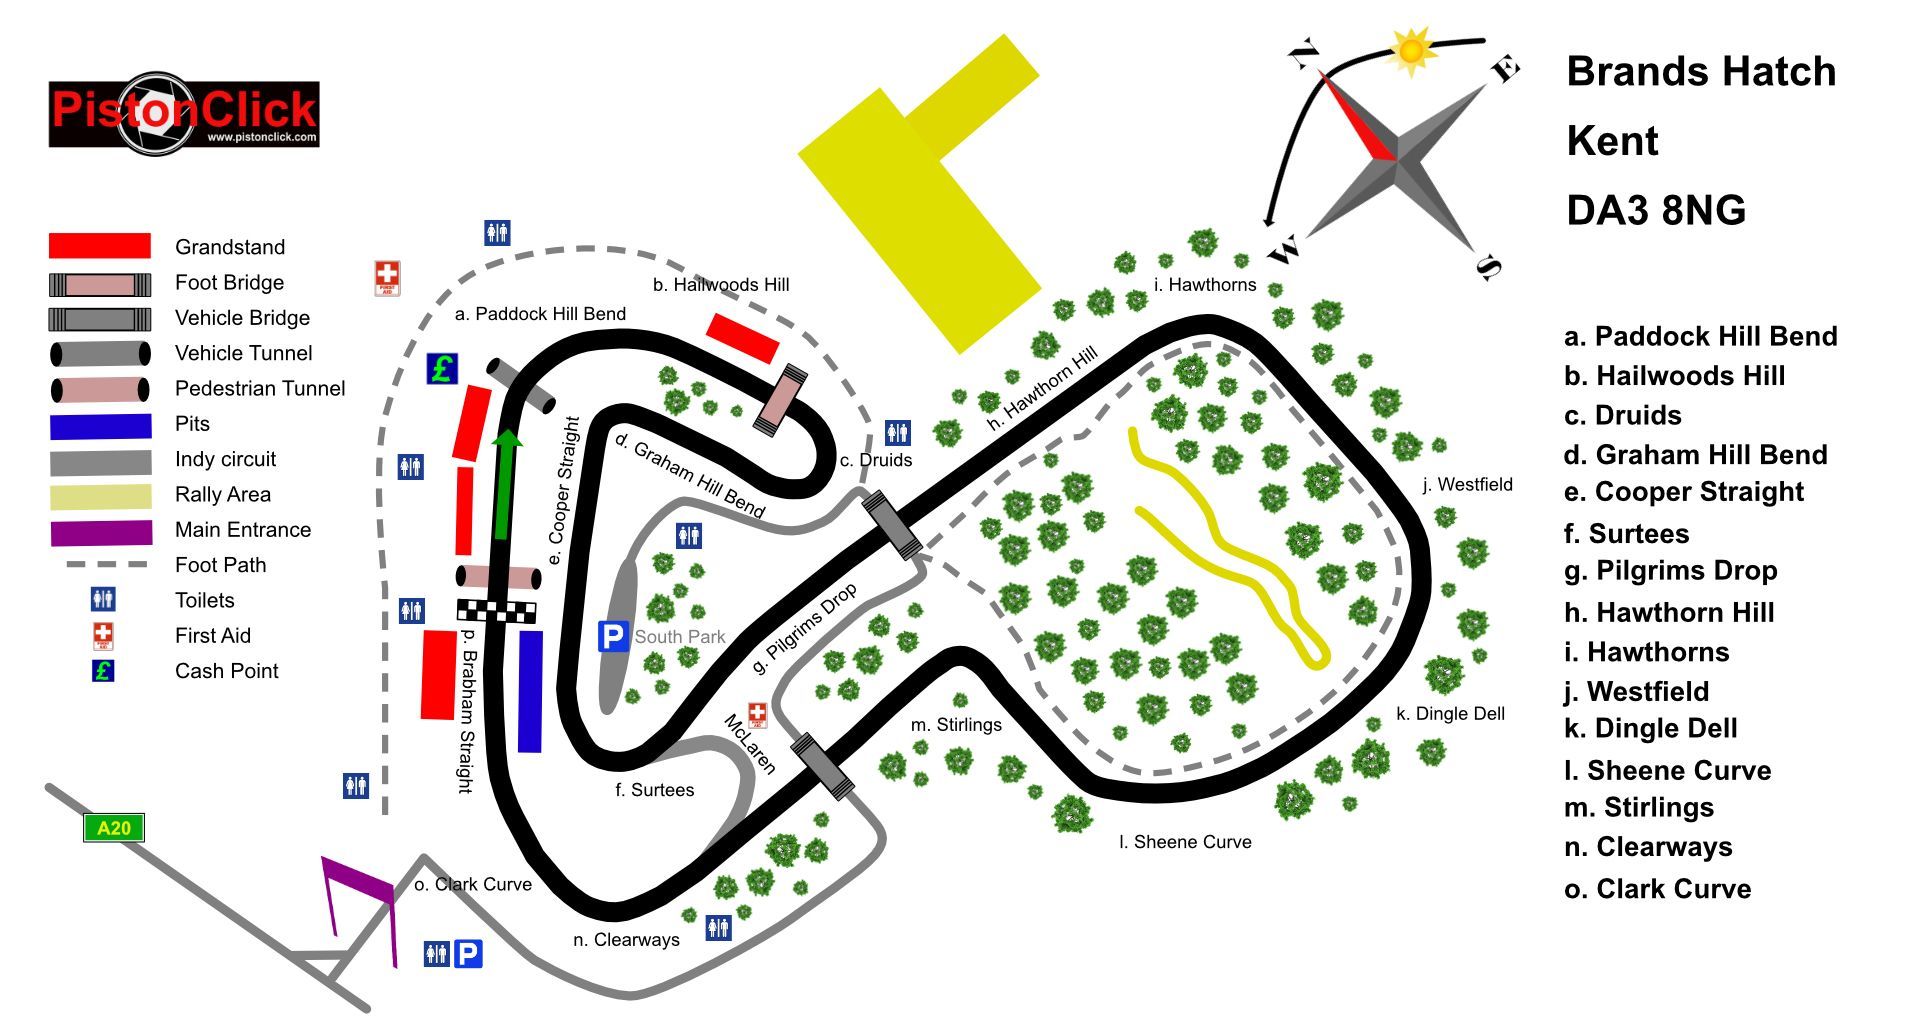 Brands Hatch map